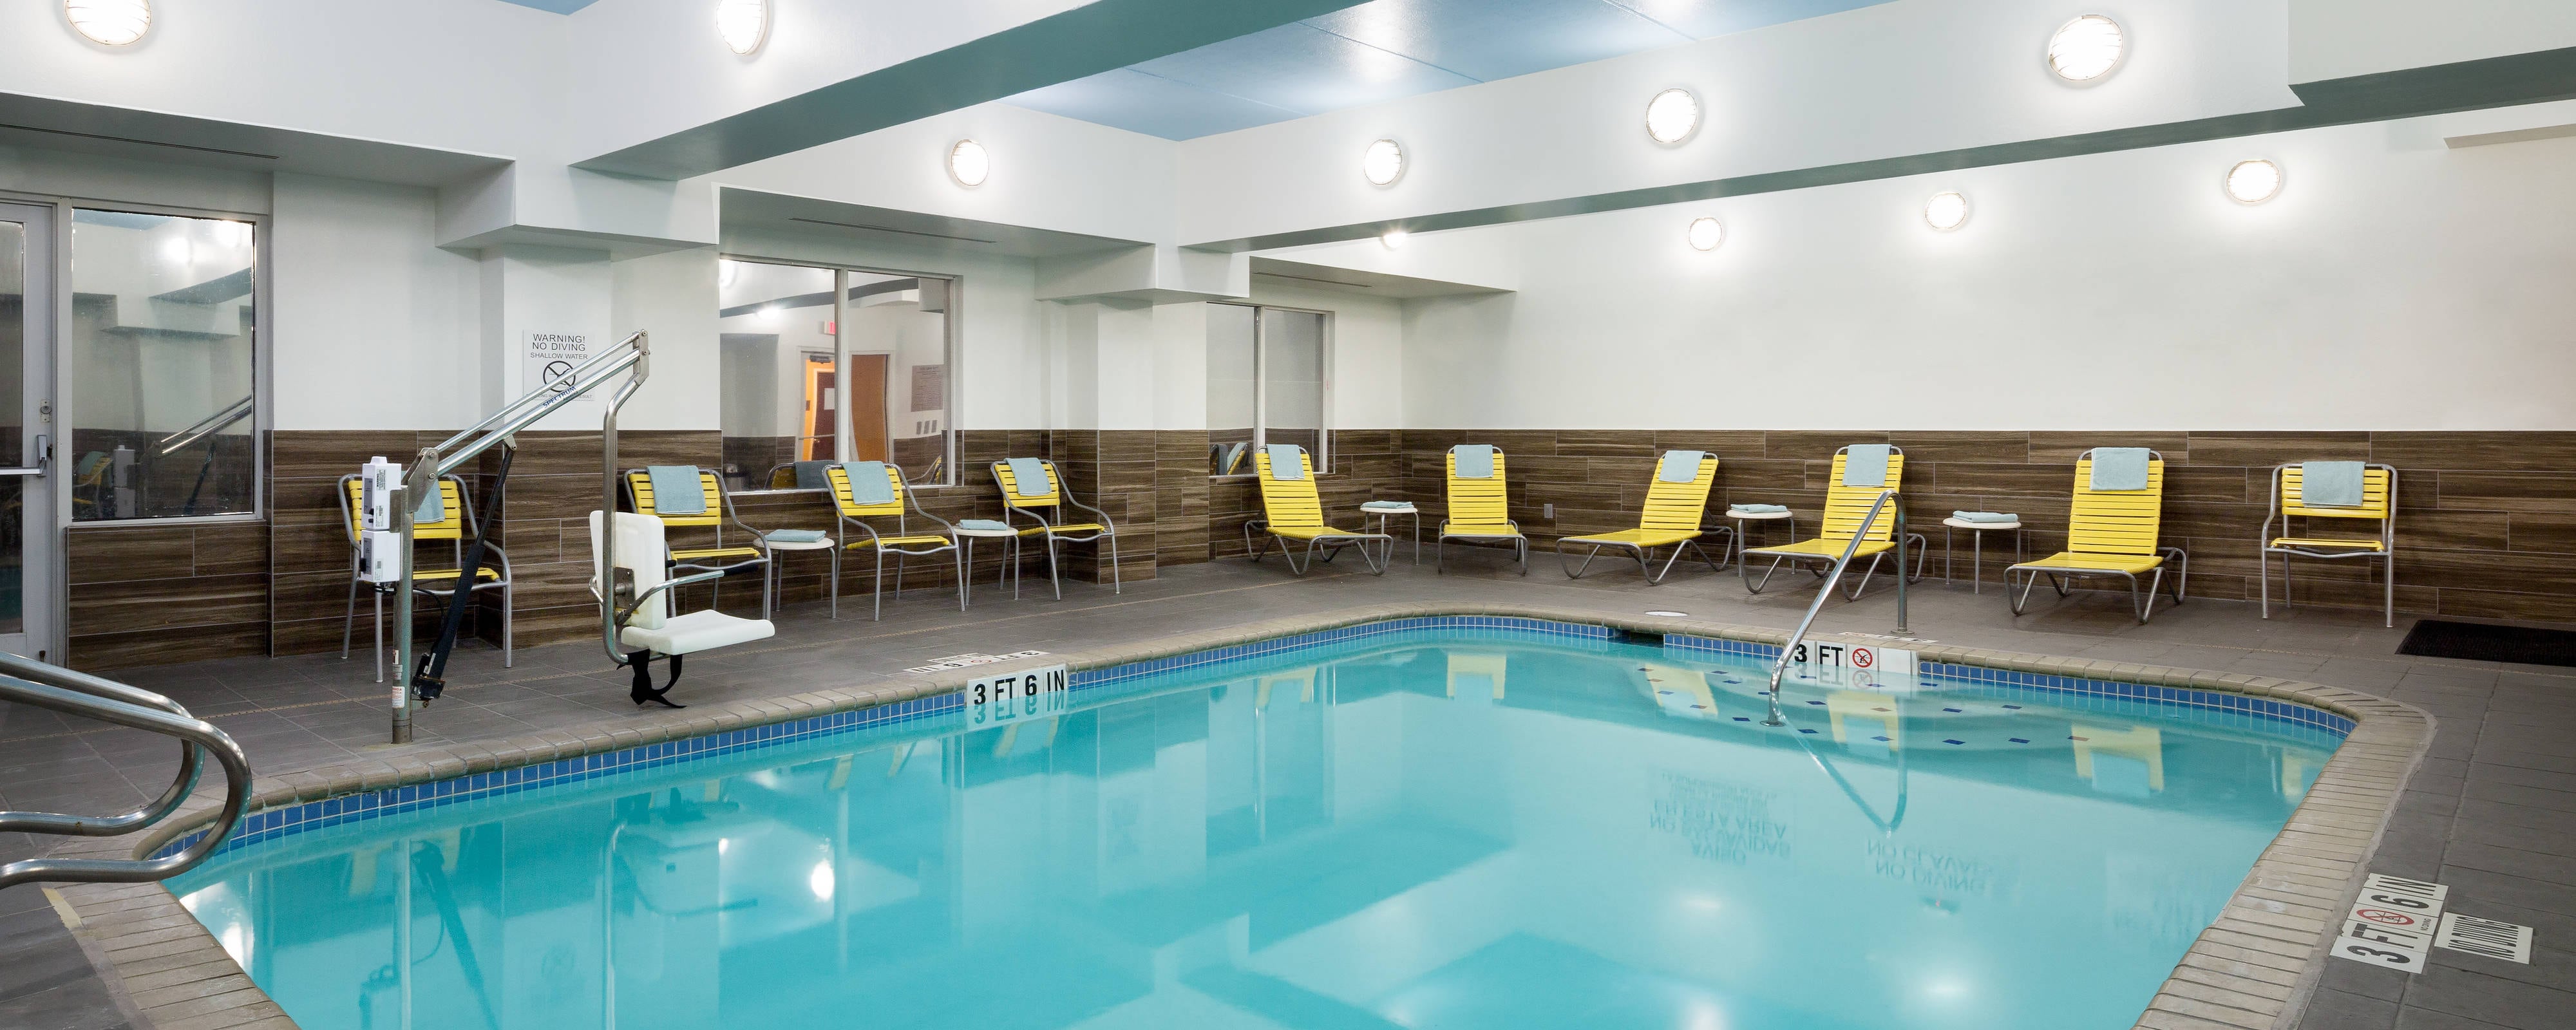 San Antonio Tx Hotel With Pool Fairfield Inn Suites San Antonio